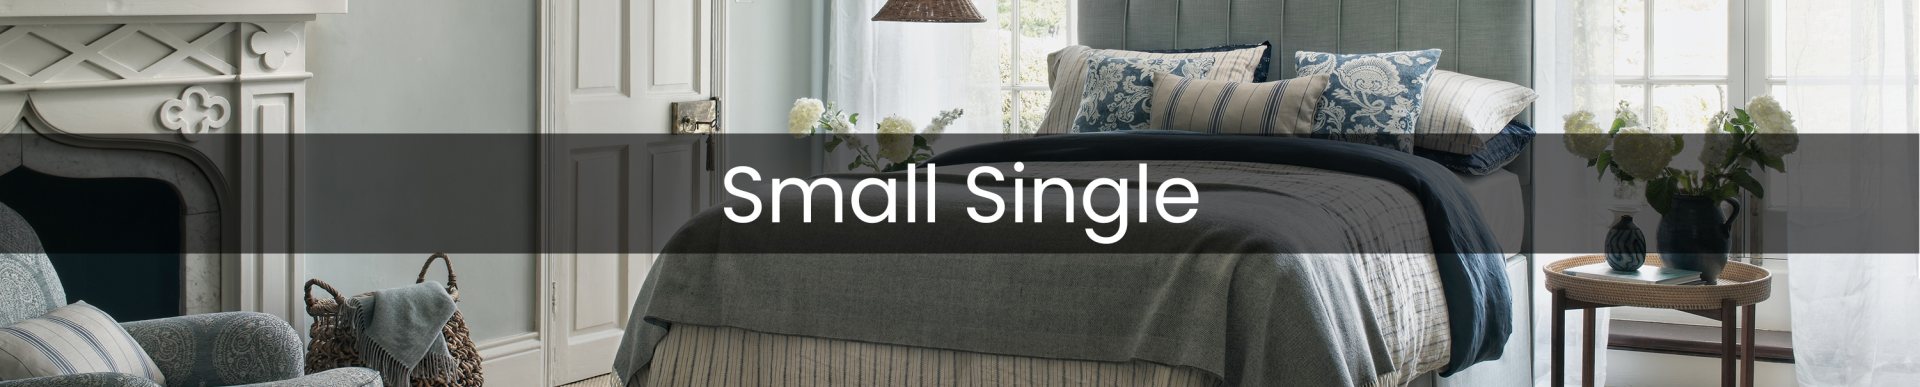 small single